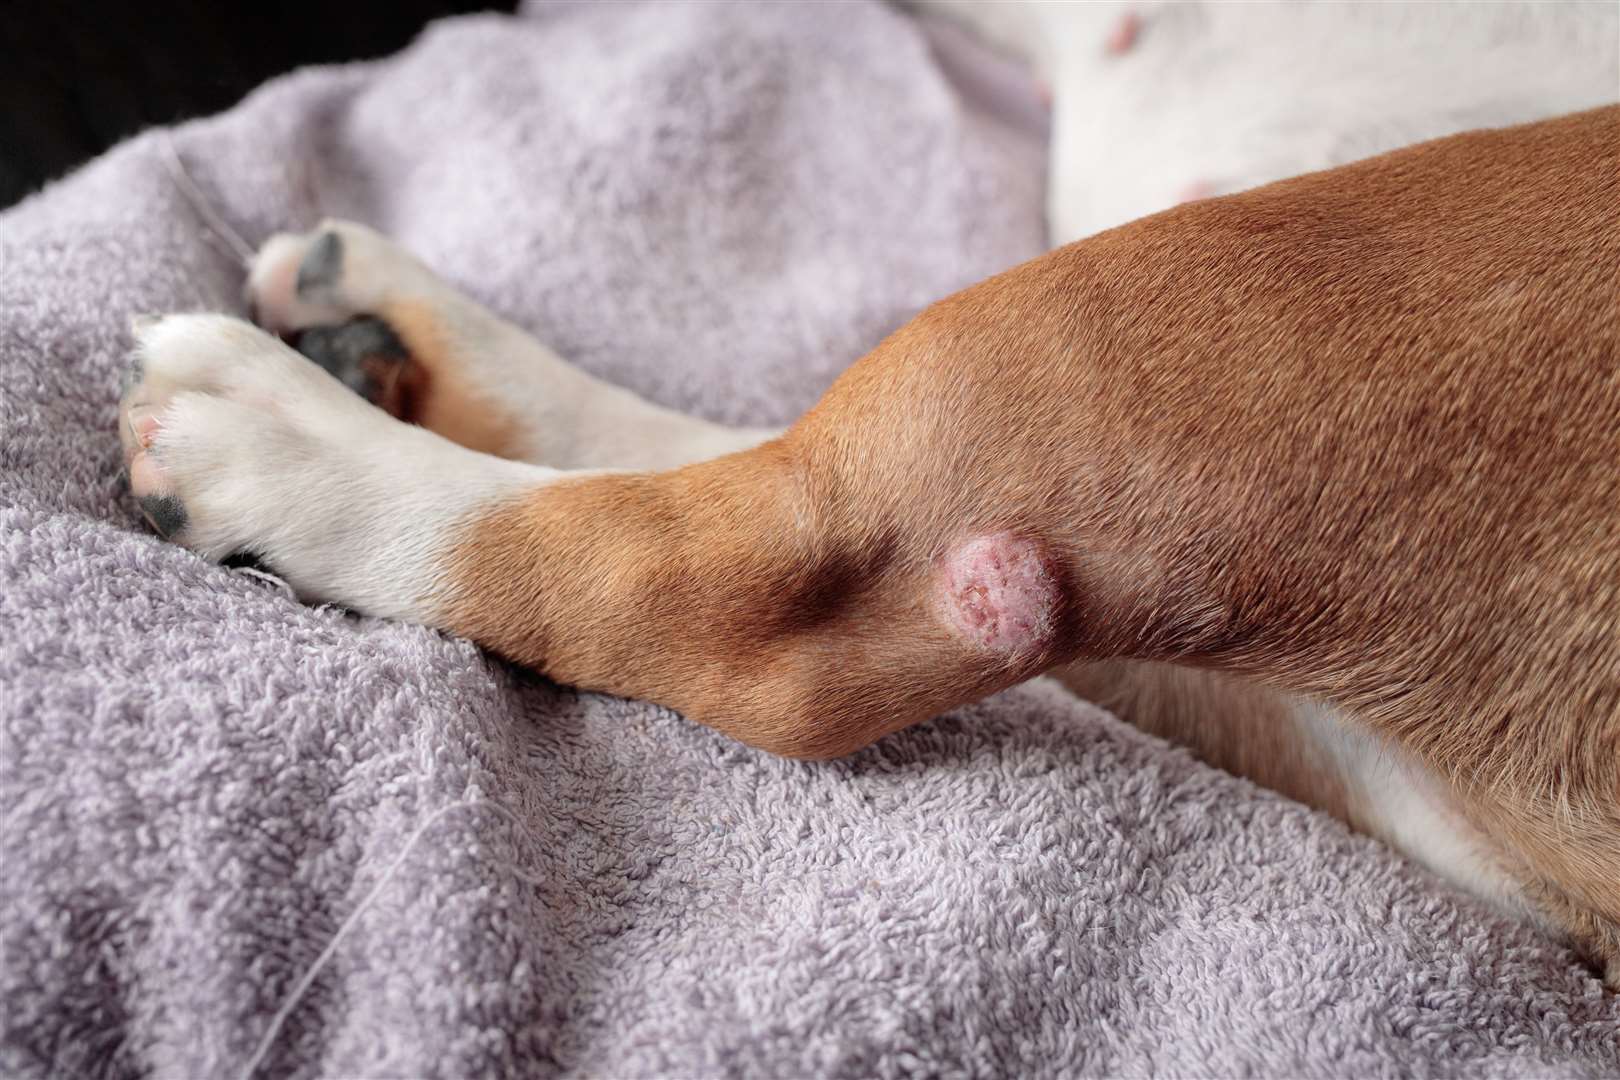 A skin problem on the leg of a female English bulldog. Photo: istock/marcoventuriniautieri